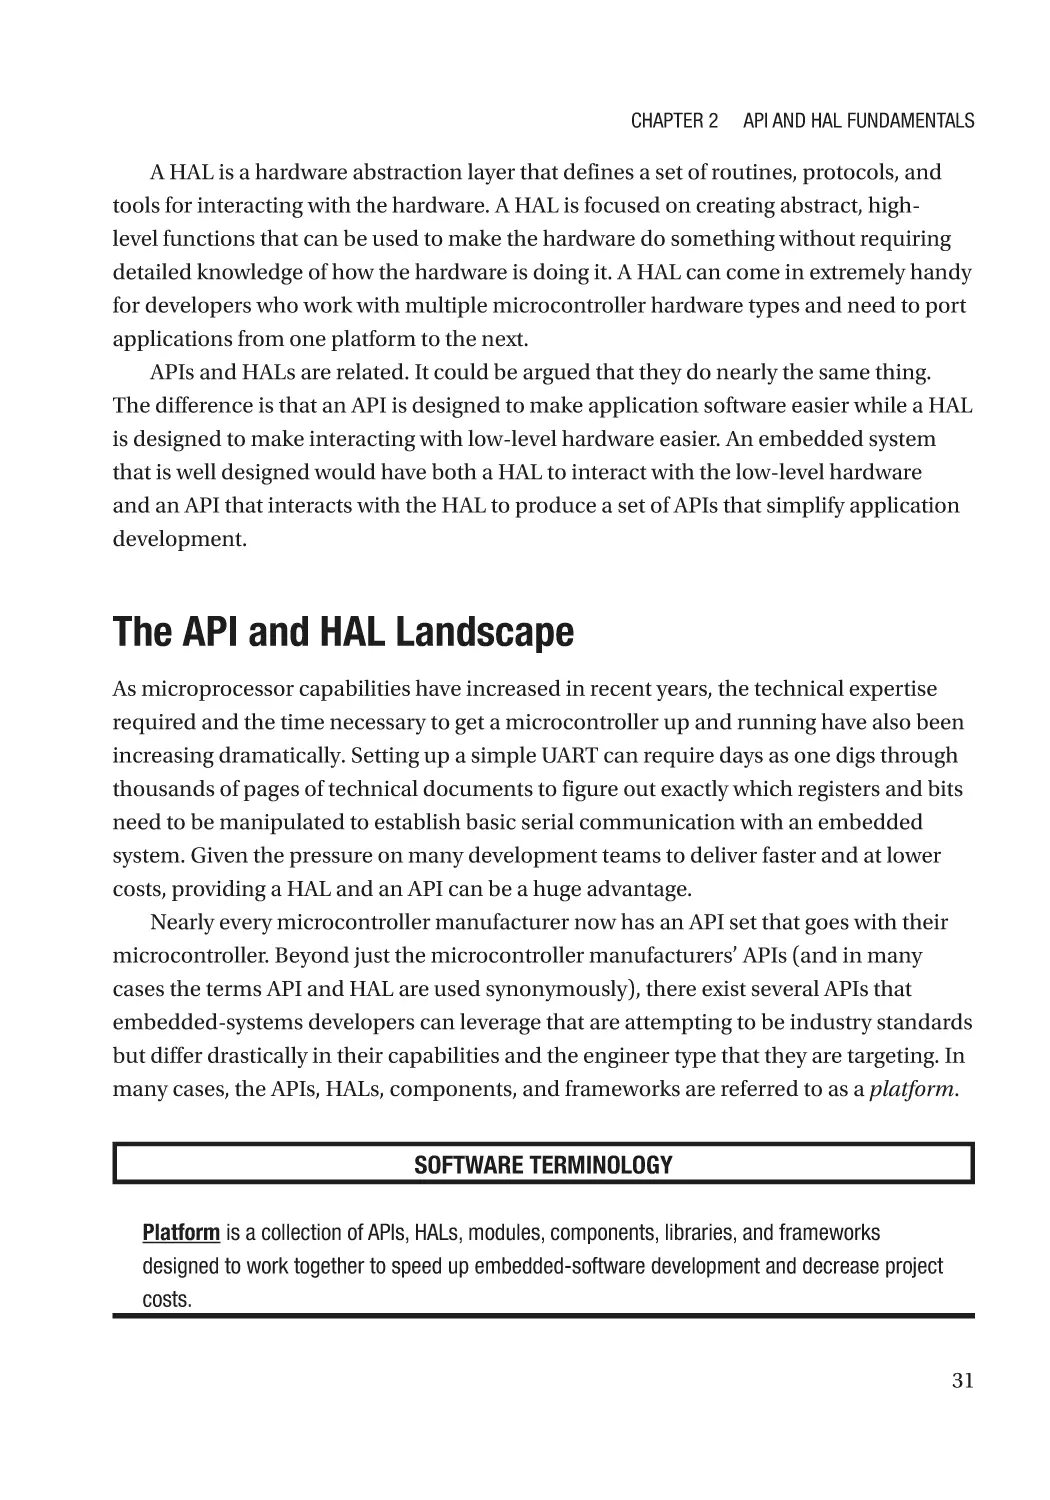 The API and HAL Landscape